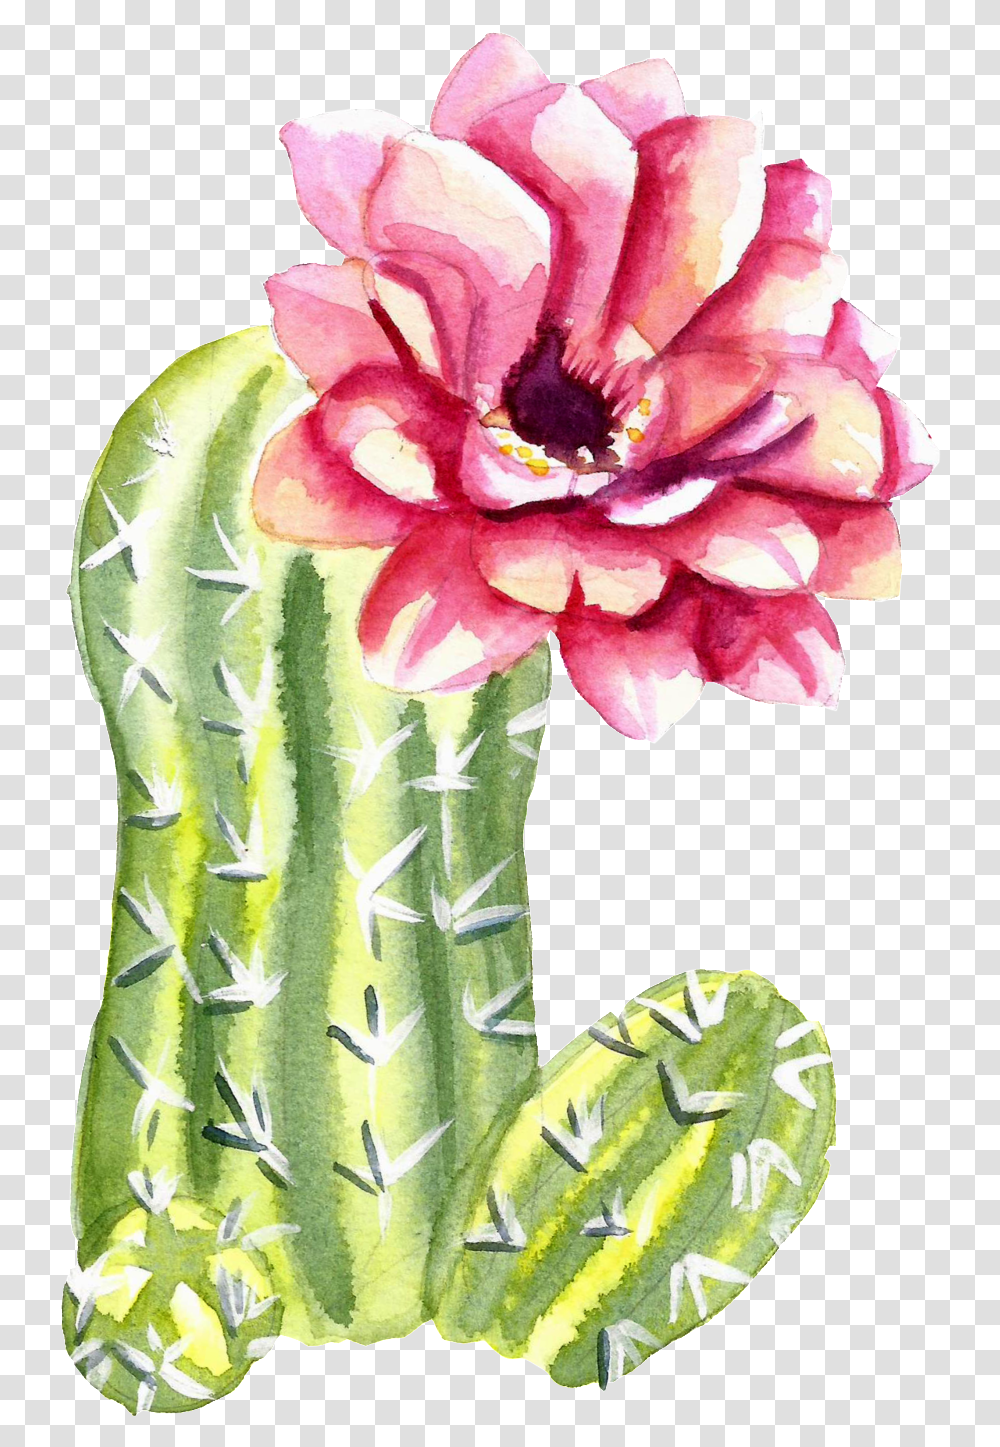 Green Watercolor Hand Painted Cactus Flower Flower Cactus Watercolor, Plant Transparent Png